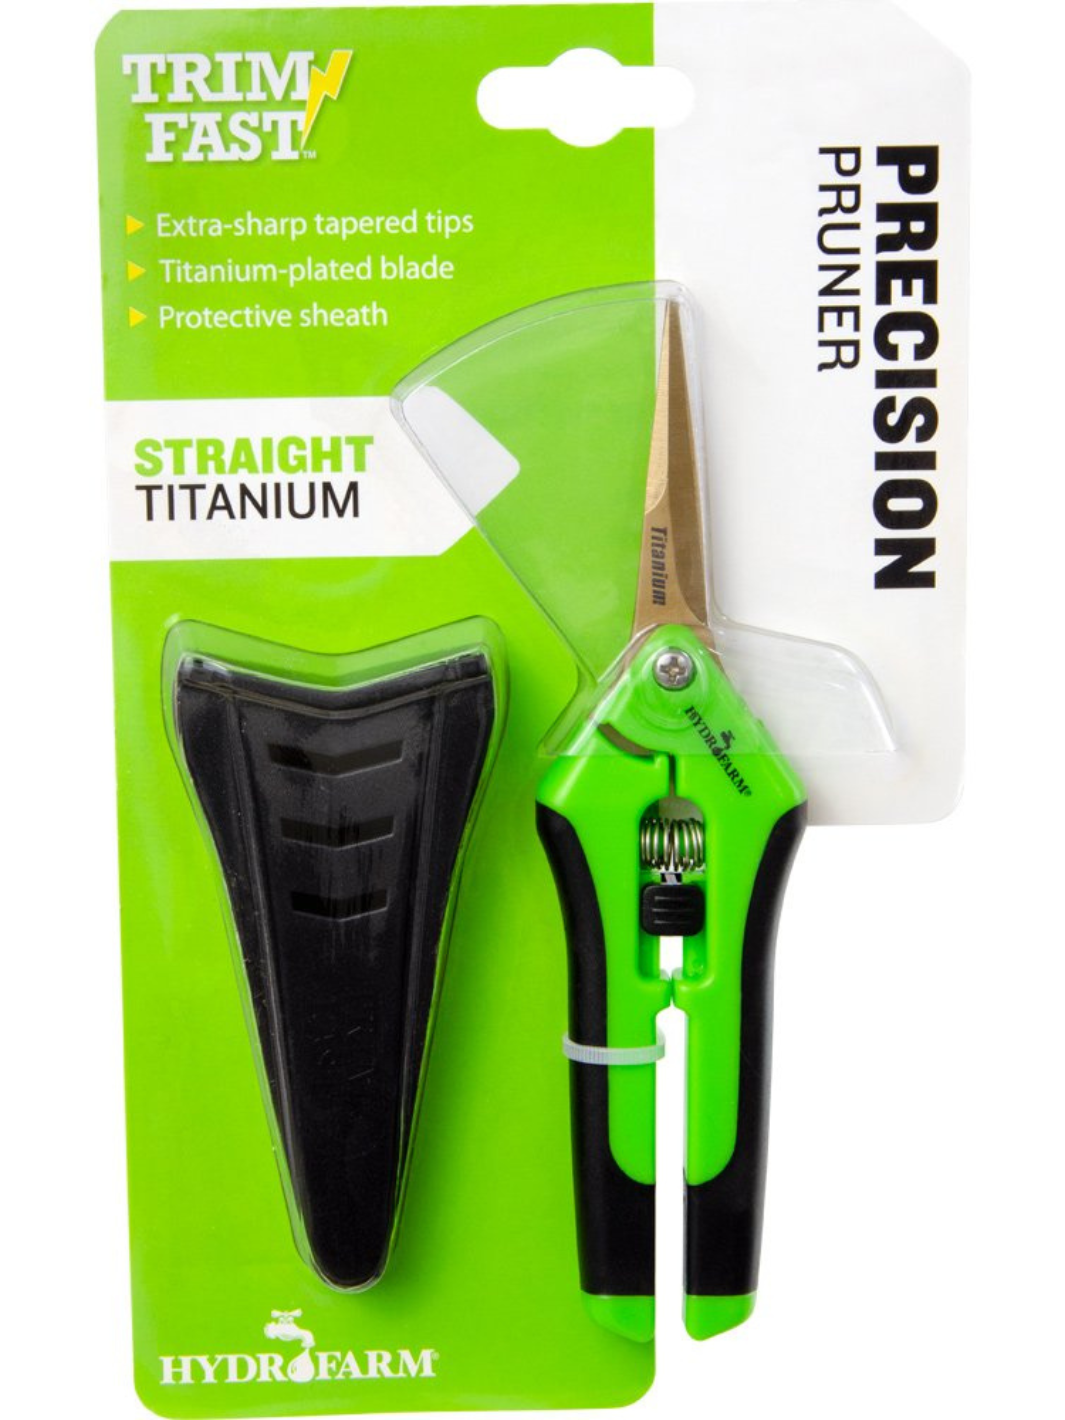 Hydrofarm Precision Titanium Pruner Straight Blade in Packaging